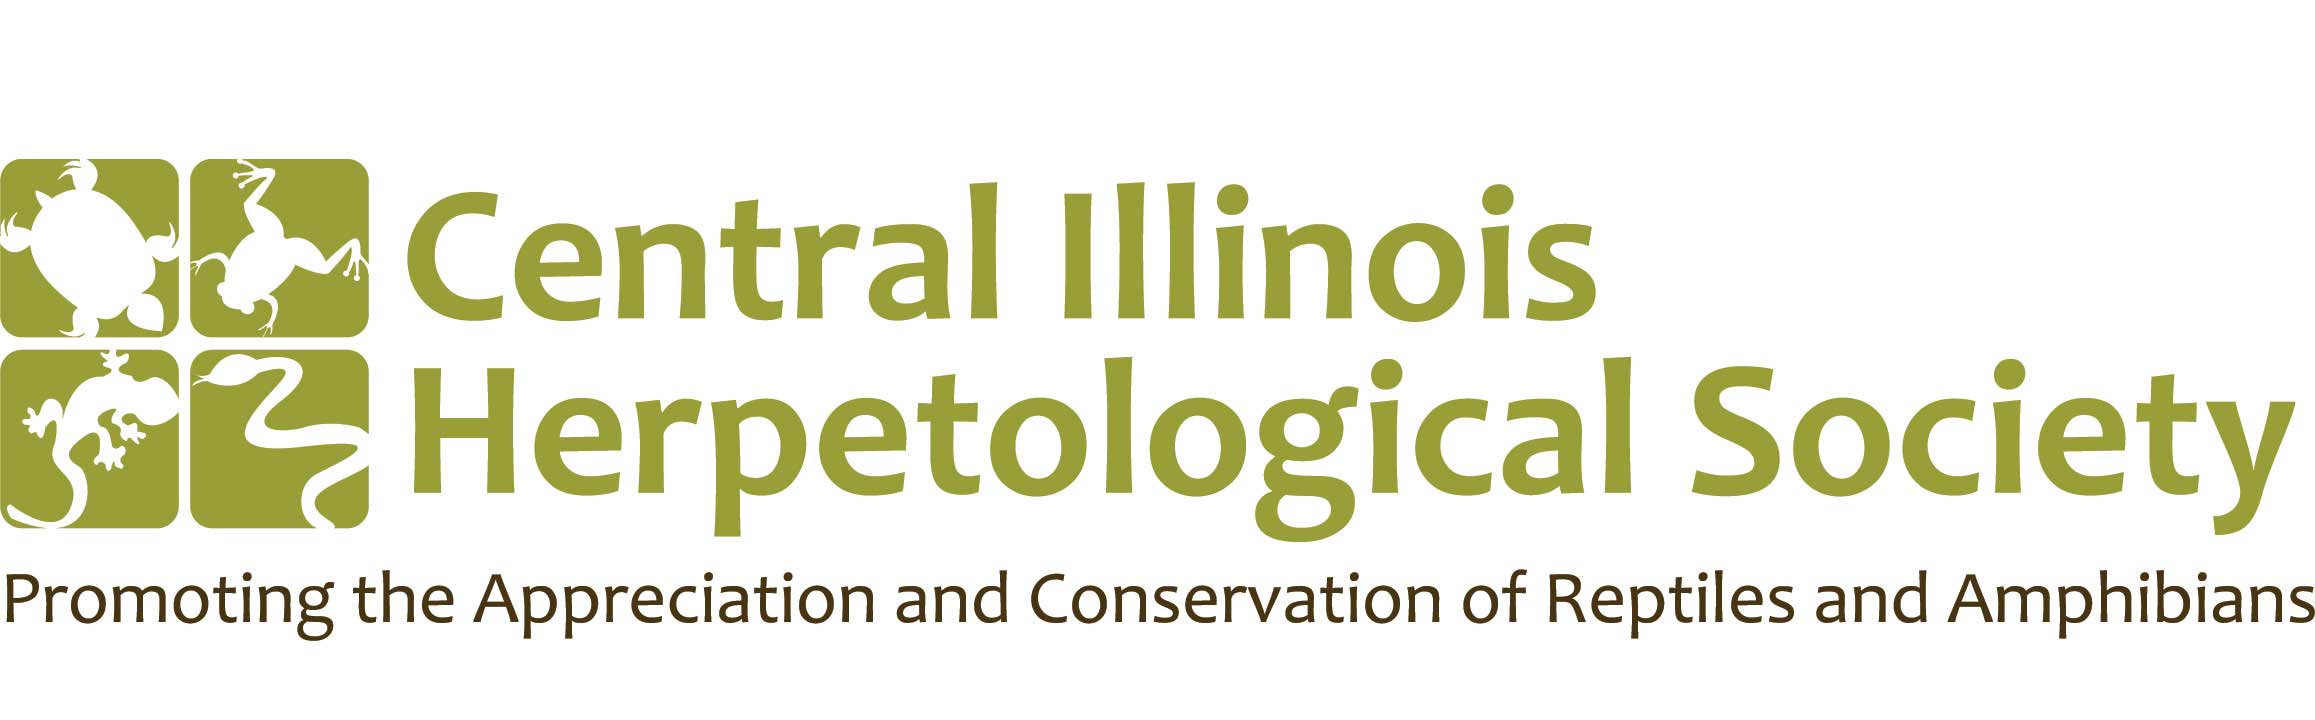 Central Illinois Herpetological Society Logo